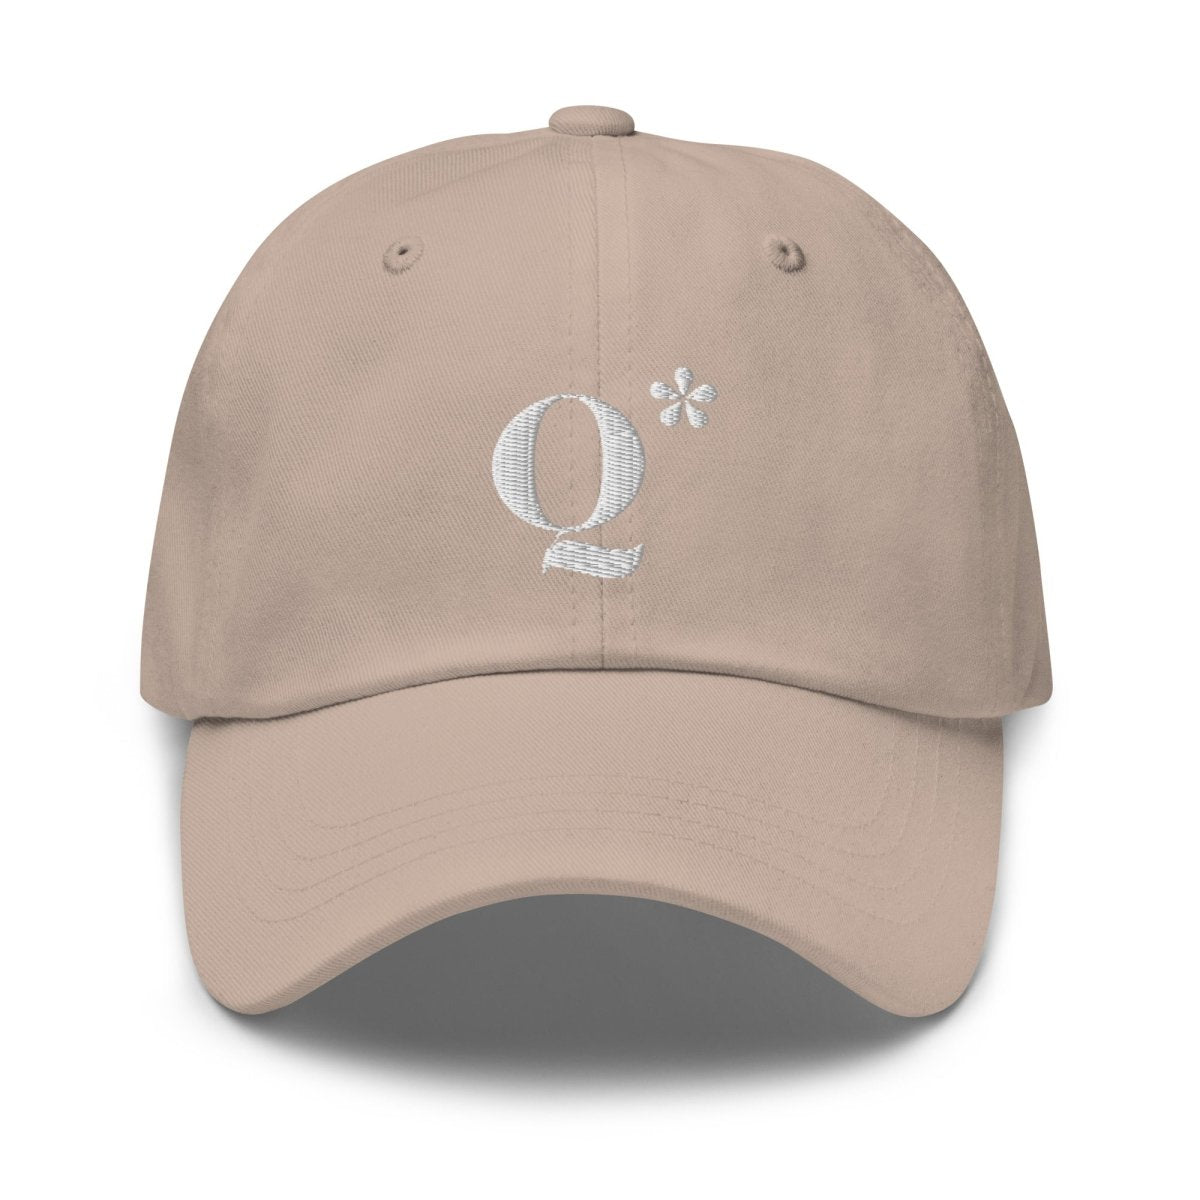 Q* (Q - Star) Embroidered Cap 3 - Stone - AI Store